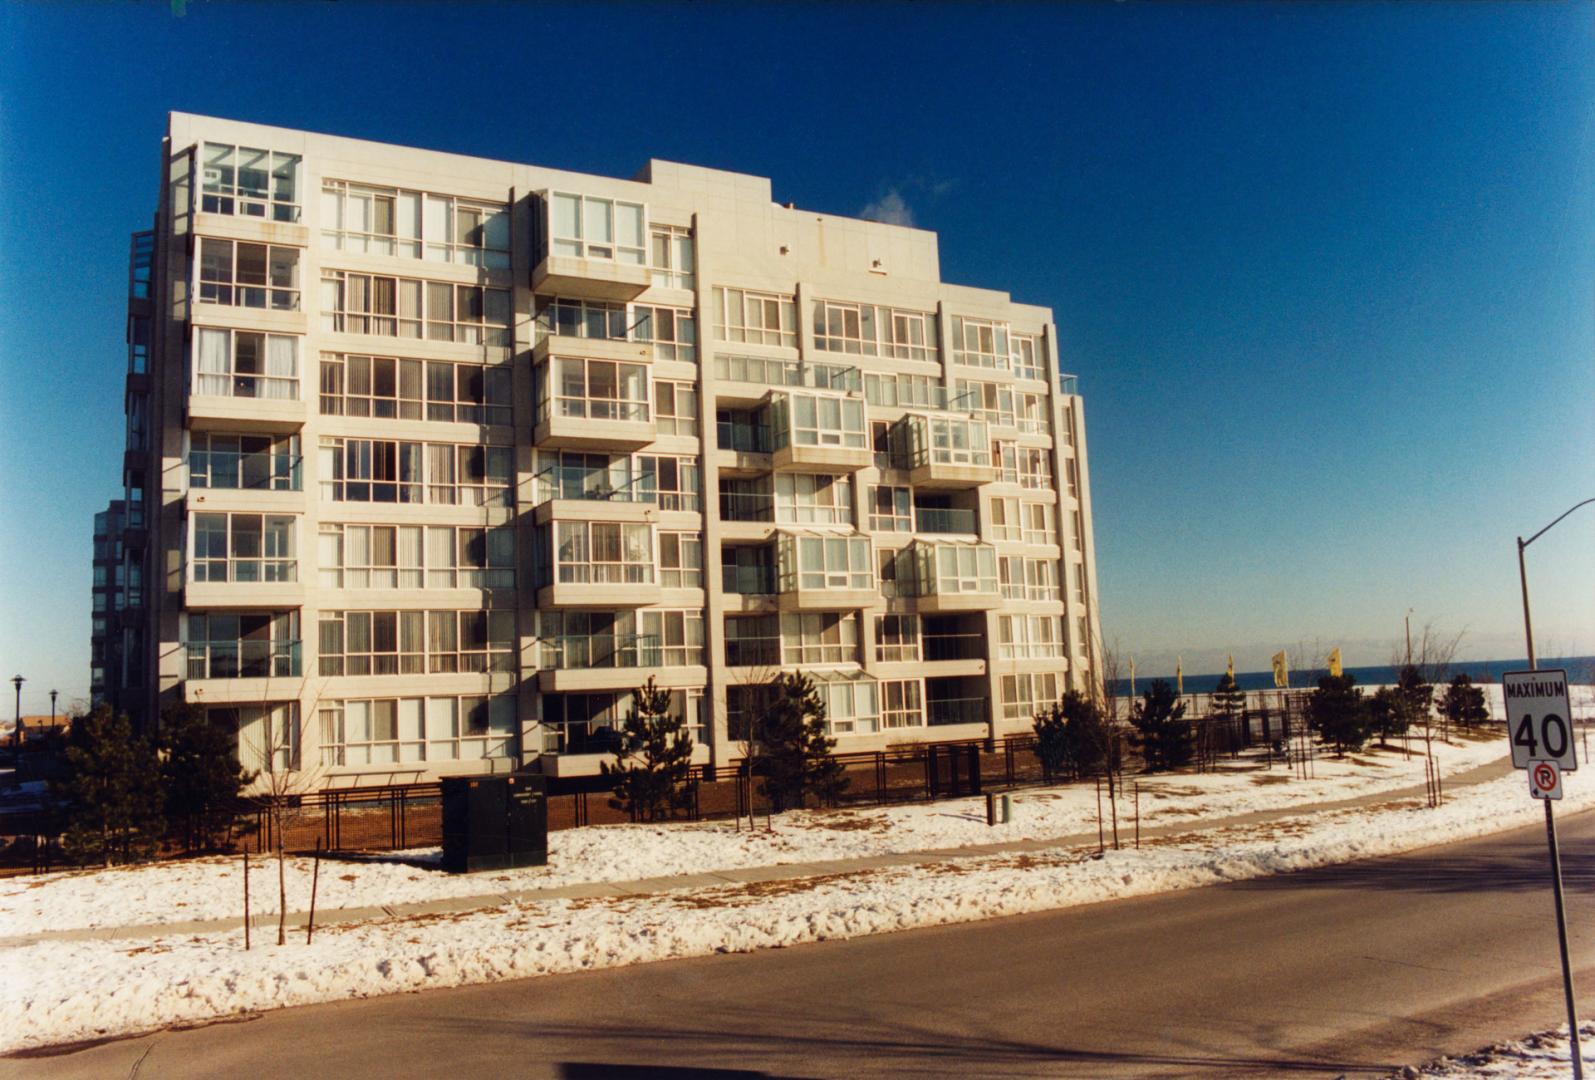 Breakers II condominiums. Ajax, Ontario